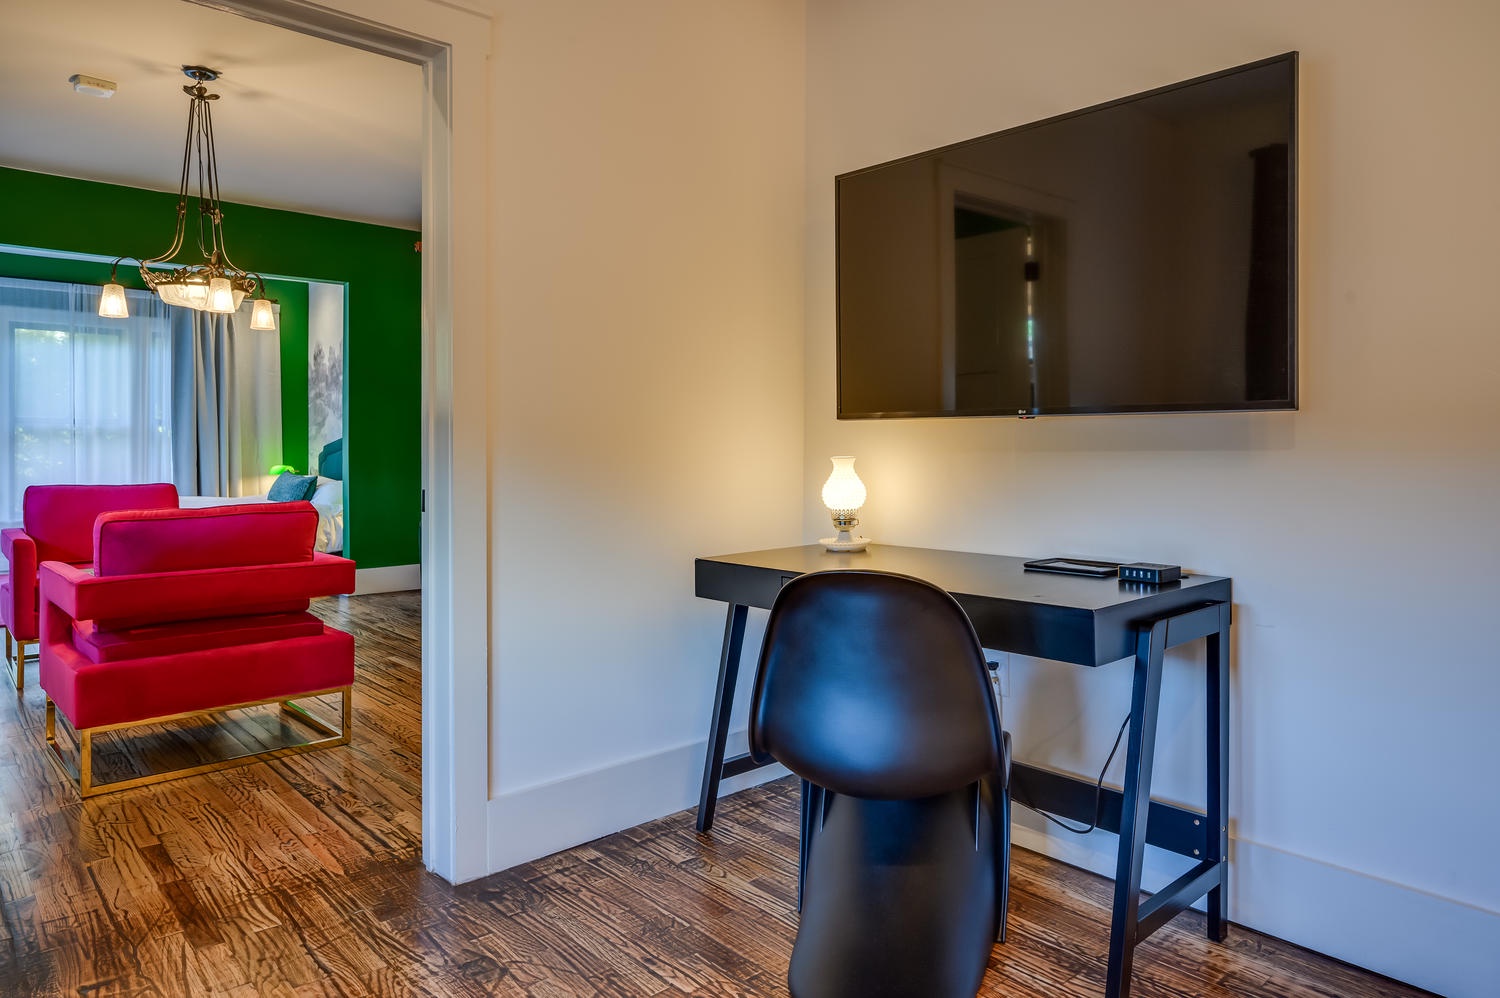 Suite 204 – The 2nd Floor Green Four-Poster Suite offers two Casper King Beds, 2 Smart TVs, and En Suite Bathroom